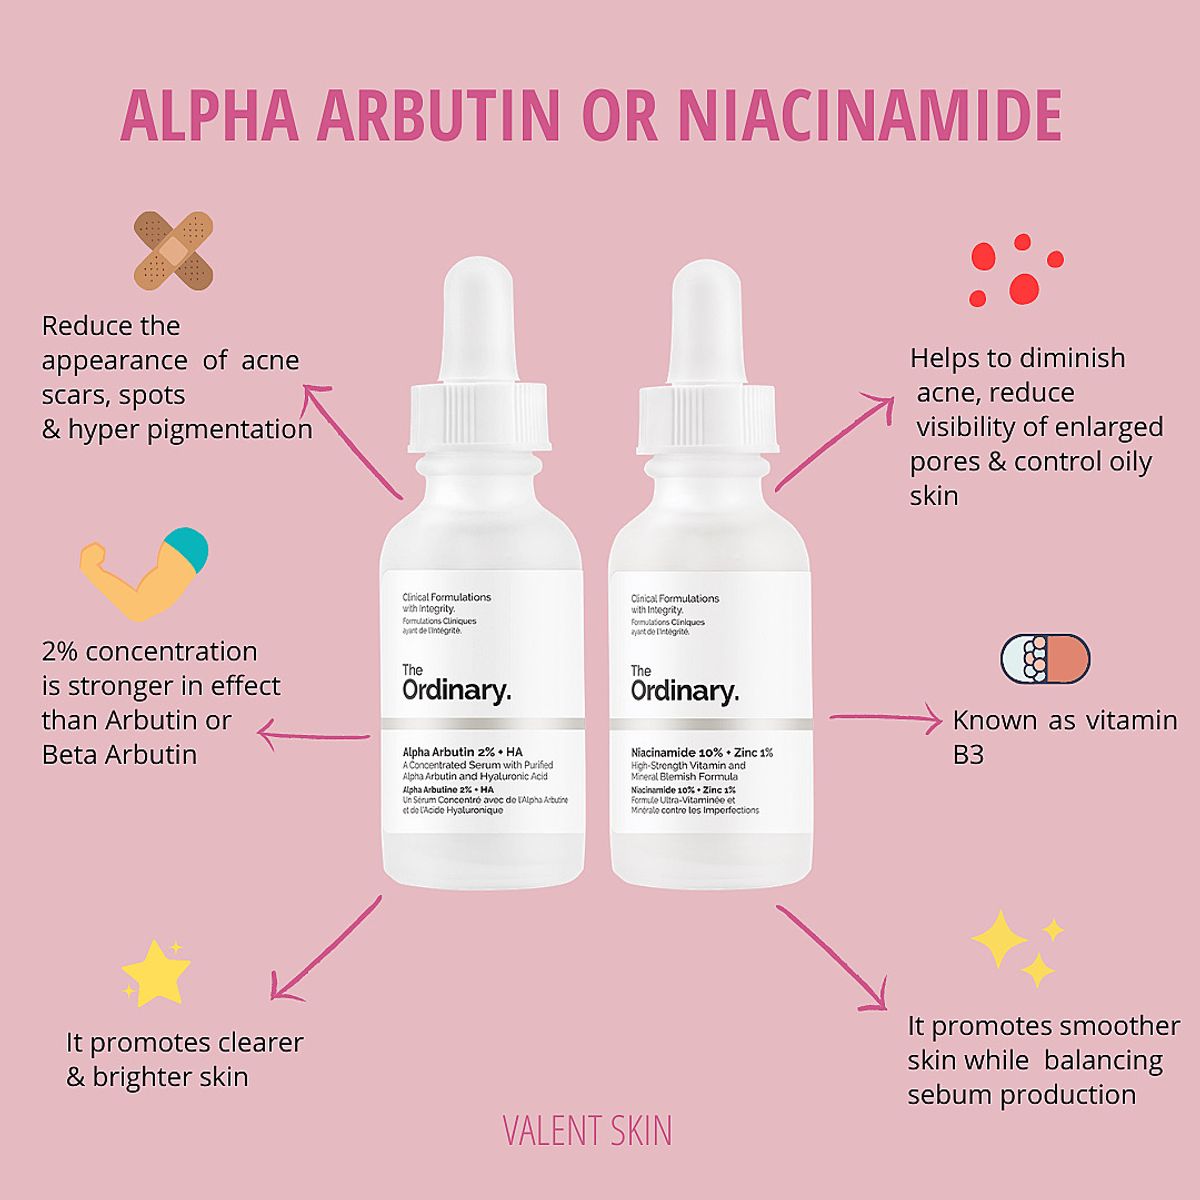 Alpha Arbutin or Niacinamide?